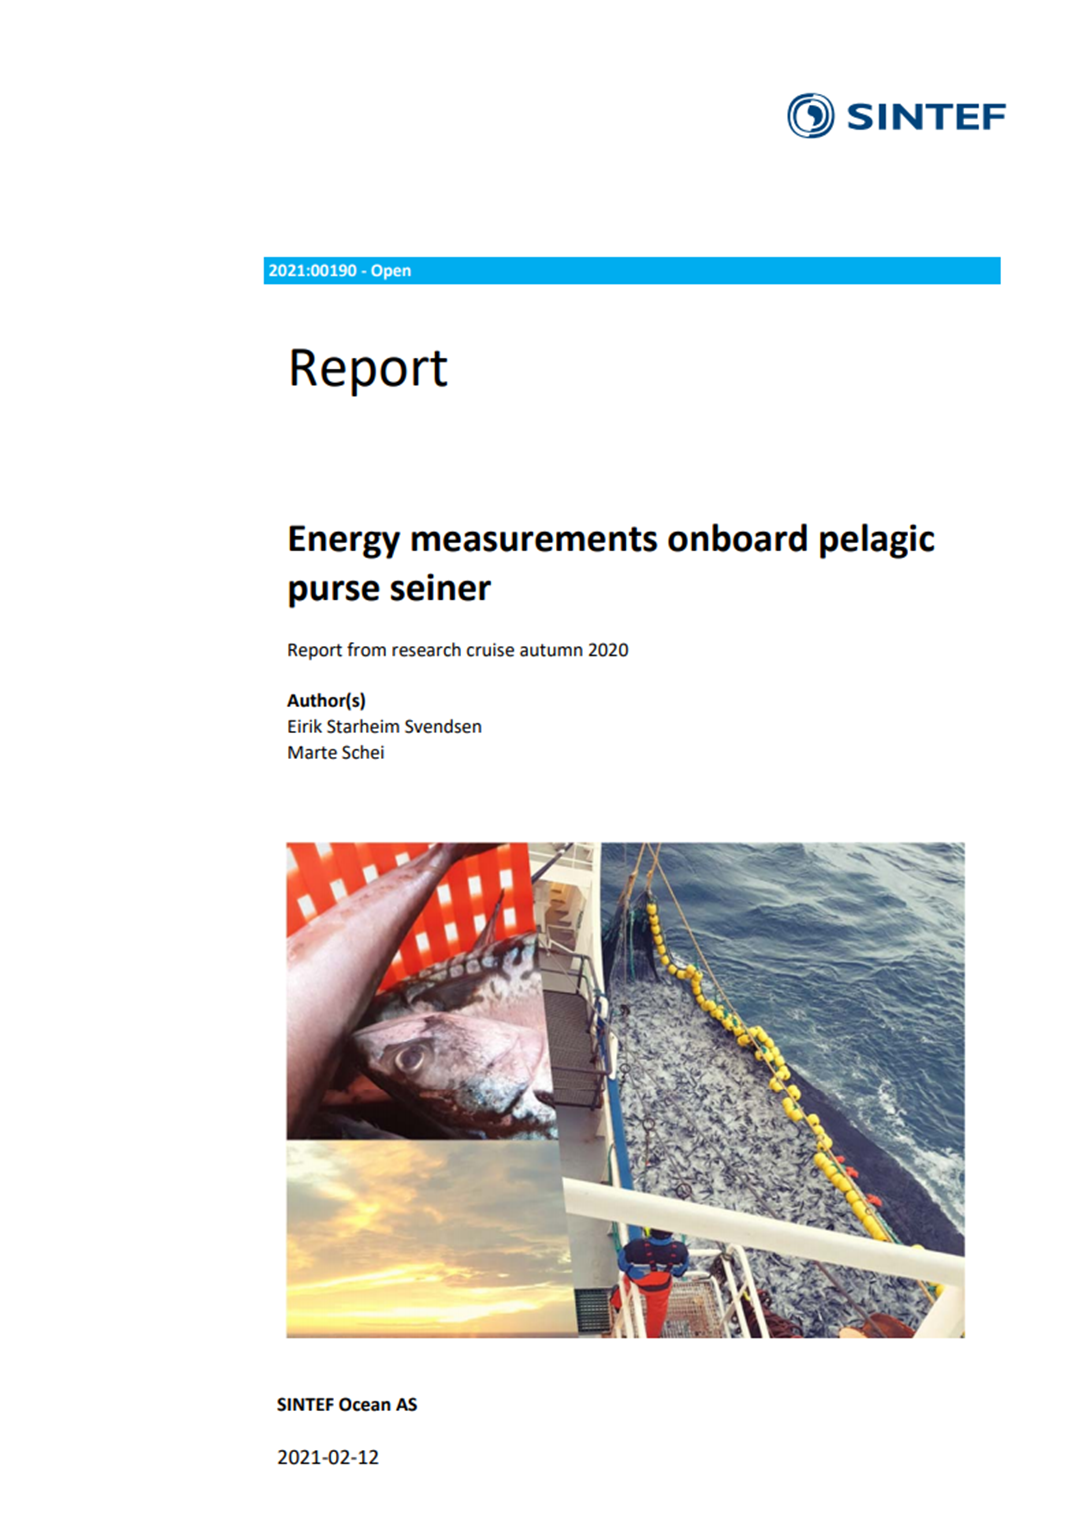 Energy measurement on board pelagic purse seiner